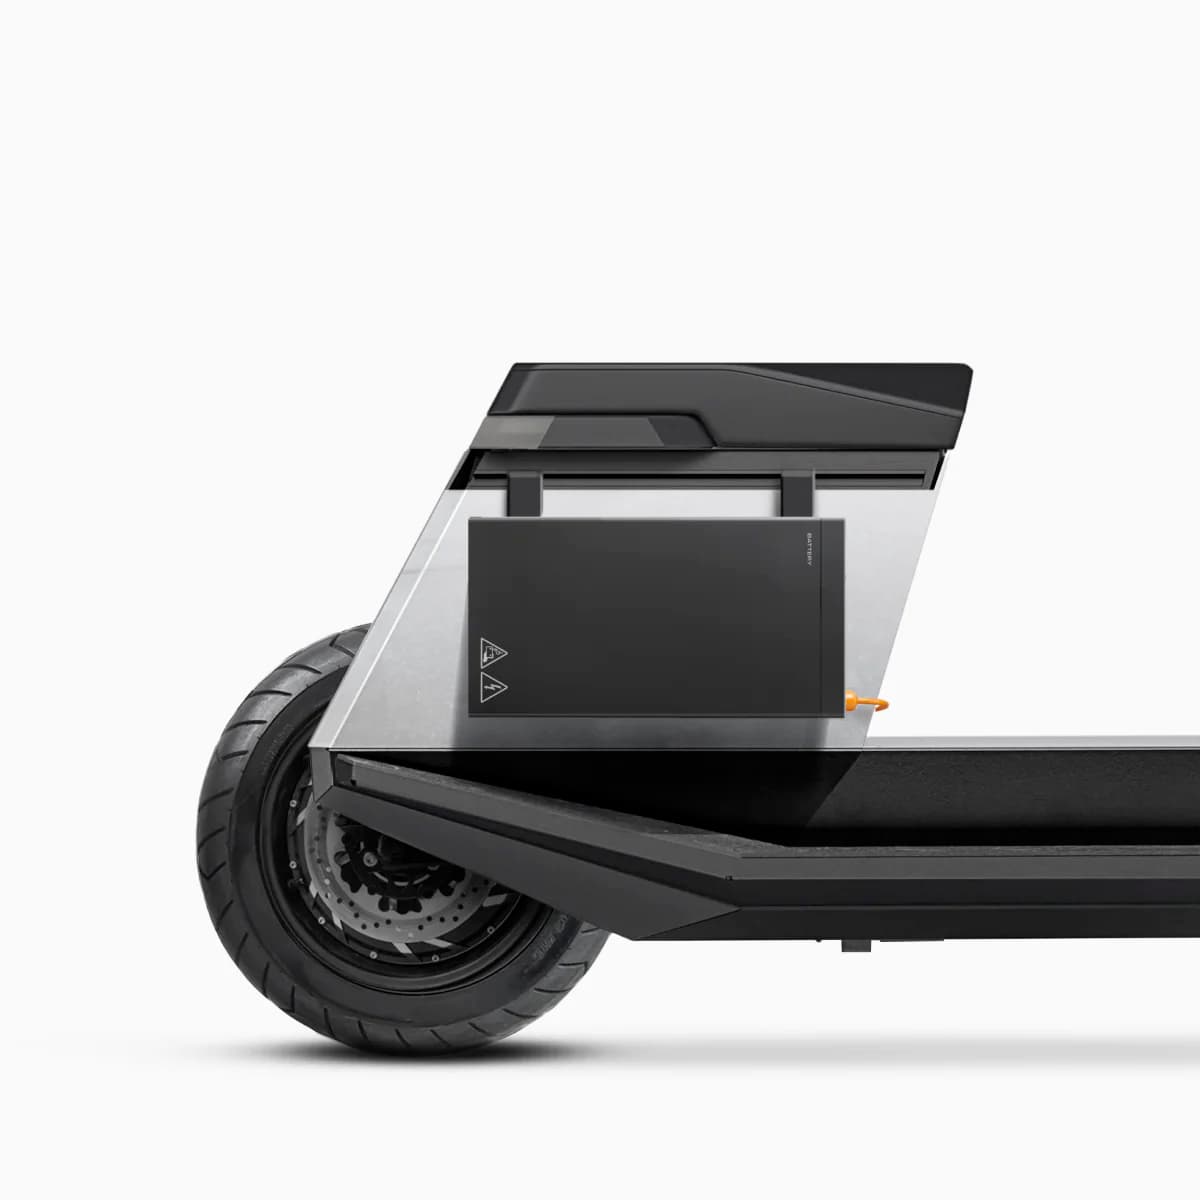 Infinite Machine P1 - the Tesla Cybertruck inspired e-moped